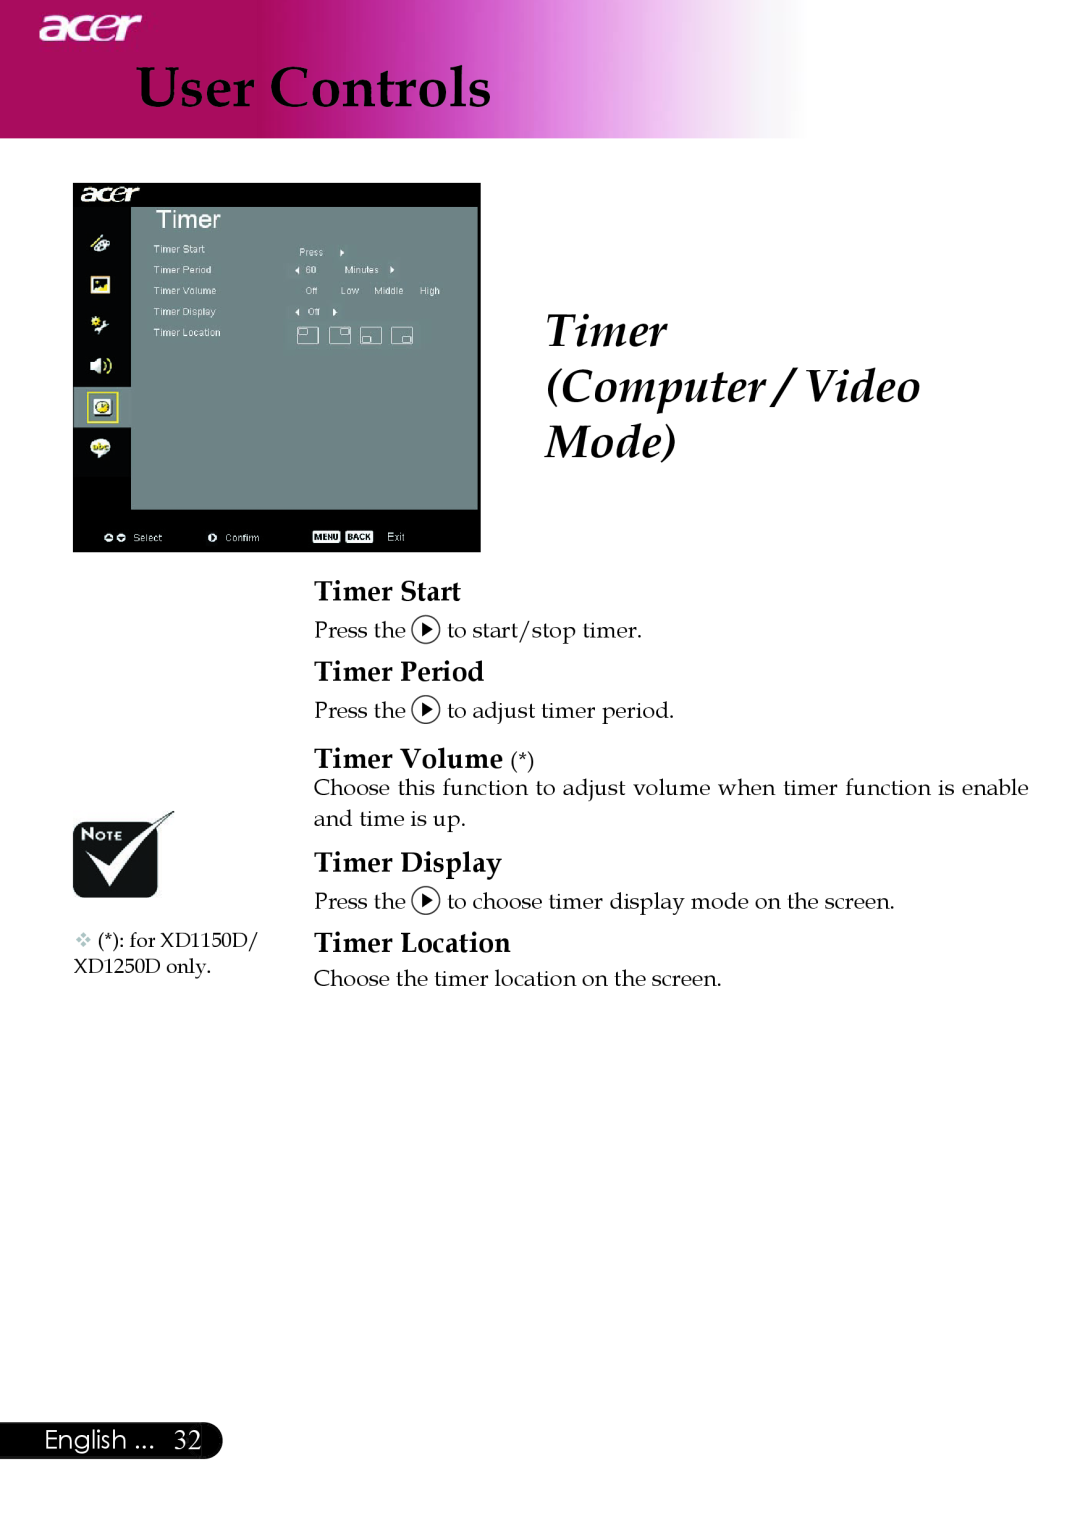 Acer XD1150D Timer Computer / Video Mode, Timer Start, Timer Period, Timer Volume, Timer Display, Timer Location, English 